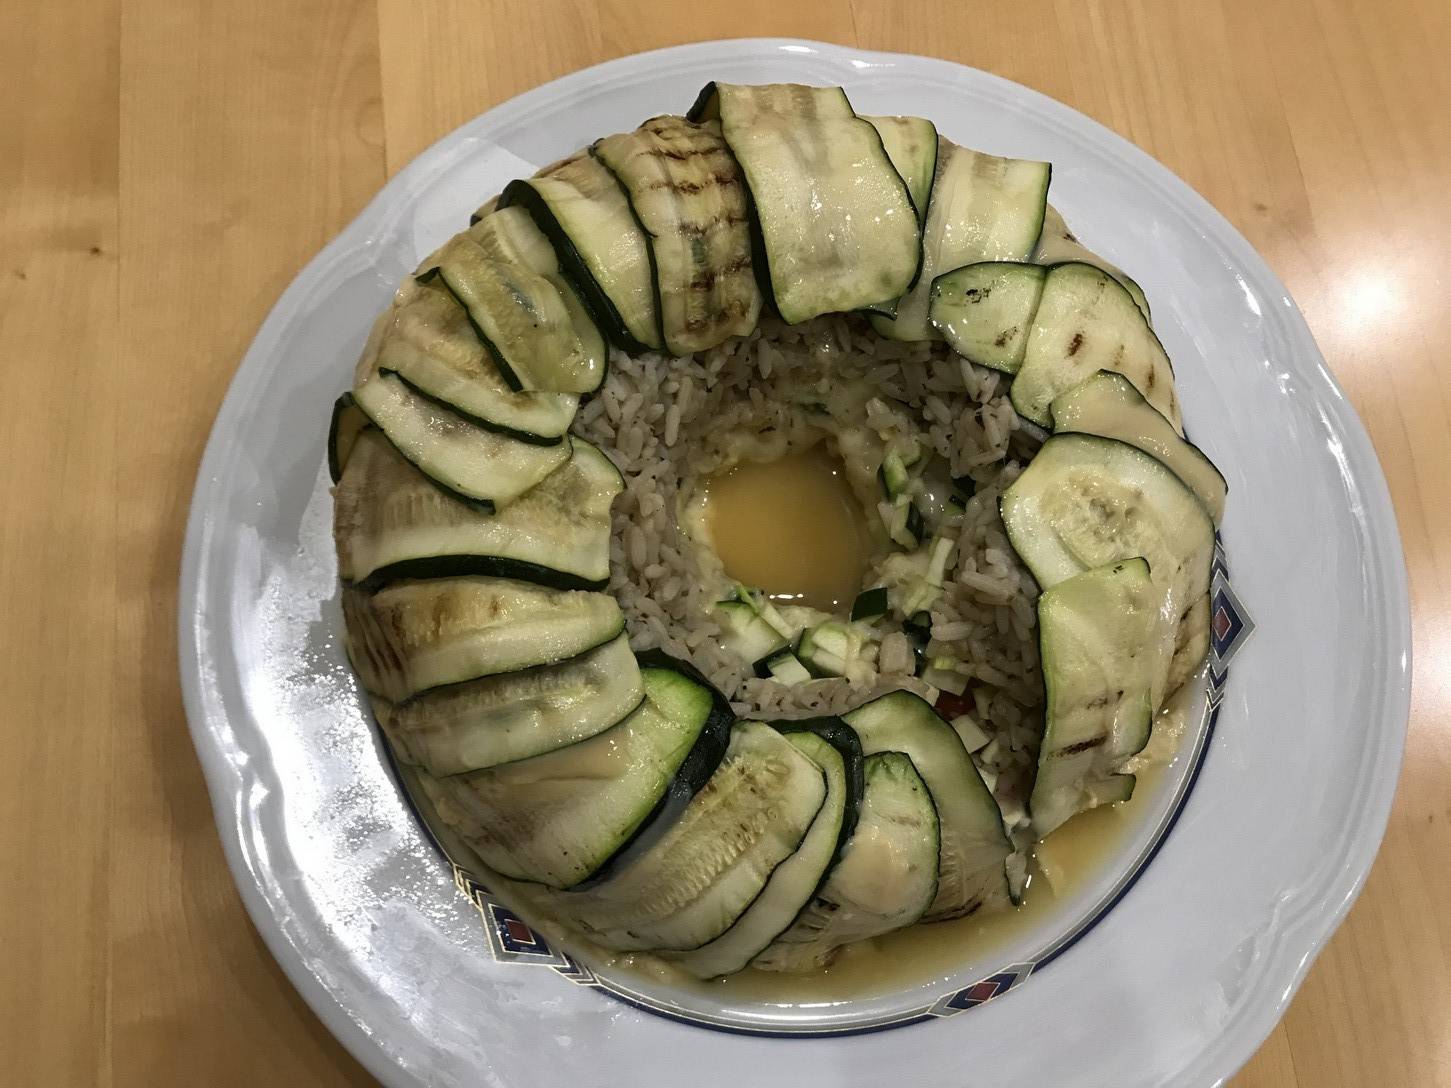 Zucchini-Reis Kranz